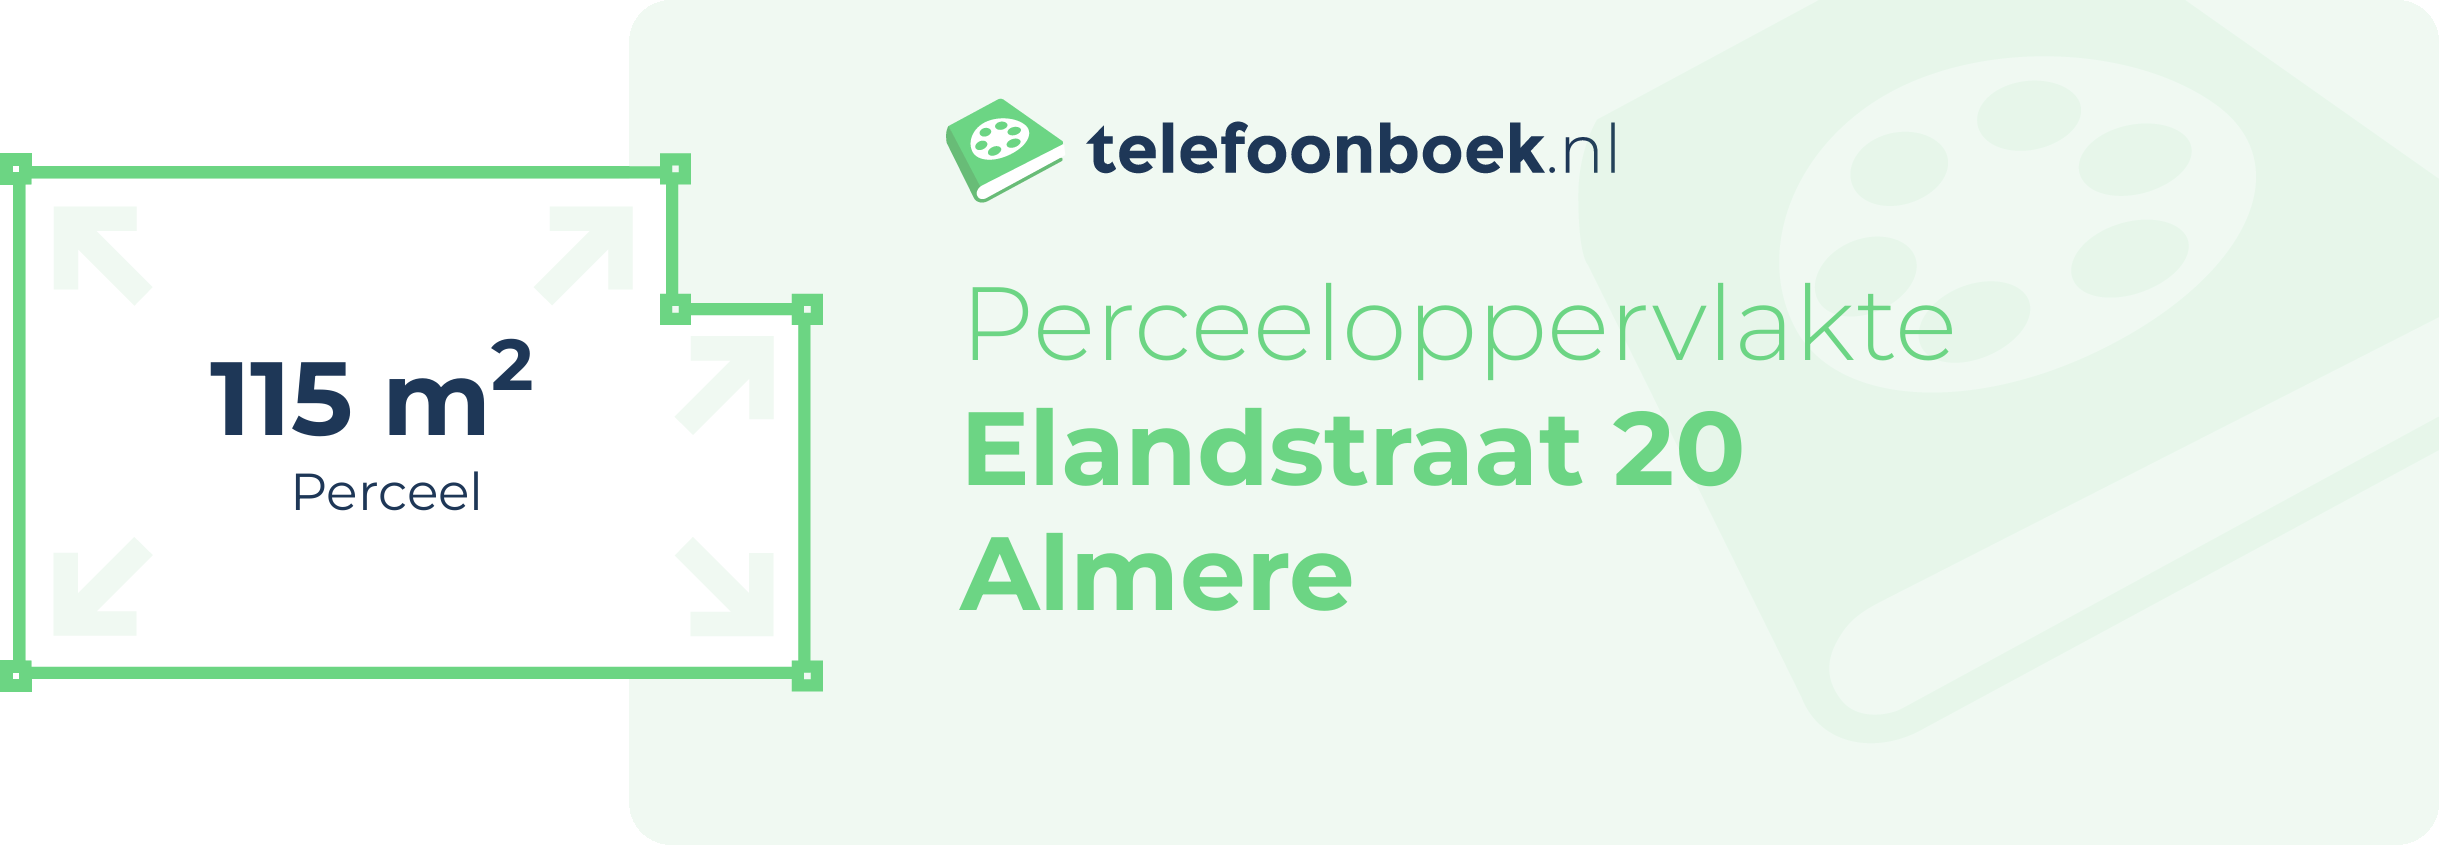 Perceeloppervlakte Elandstraat 20 Almere